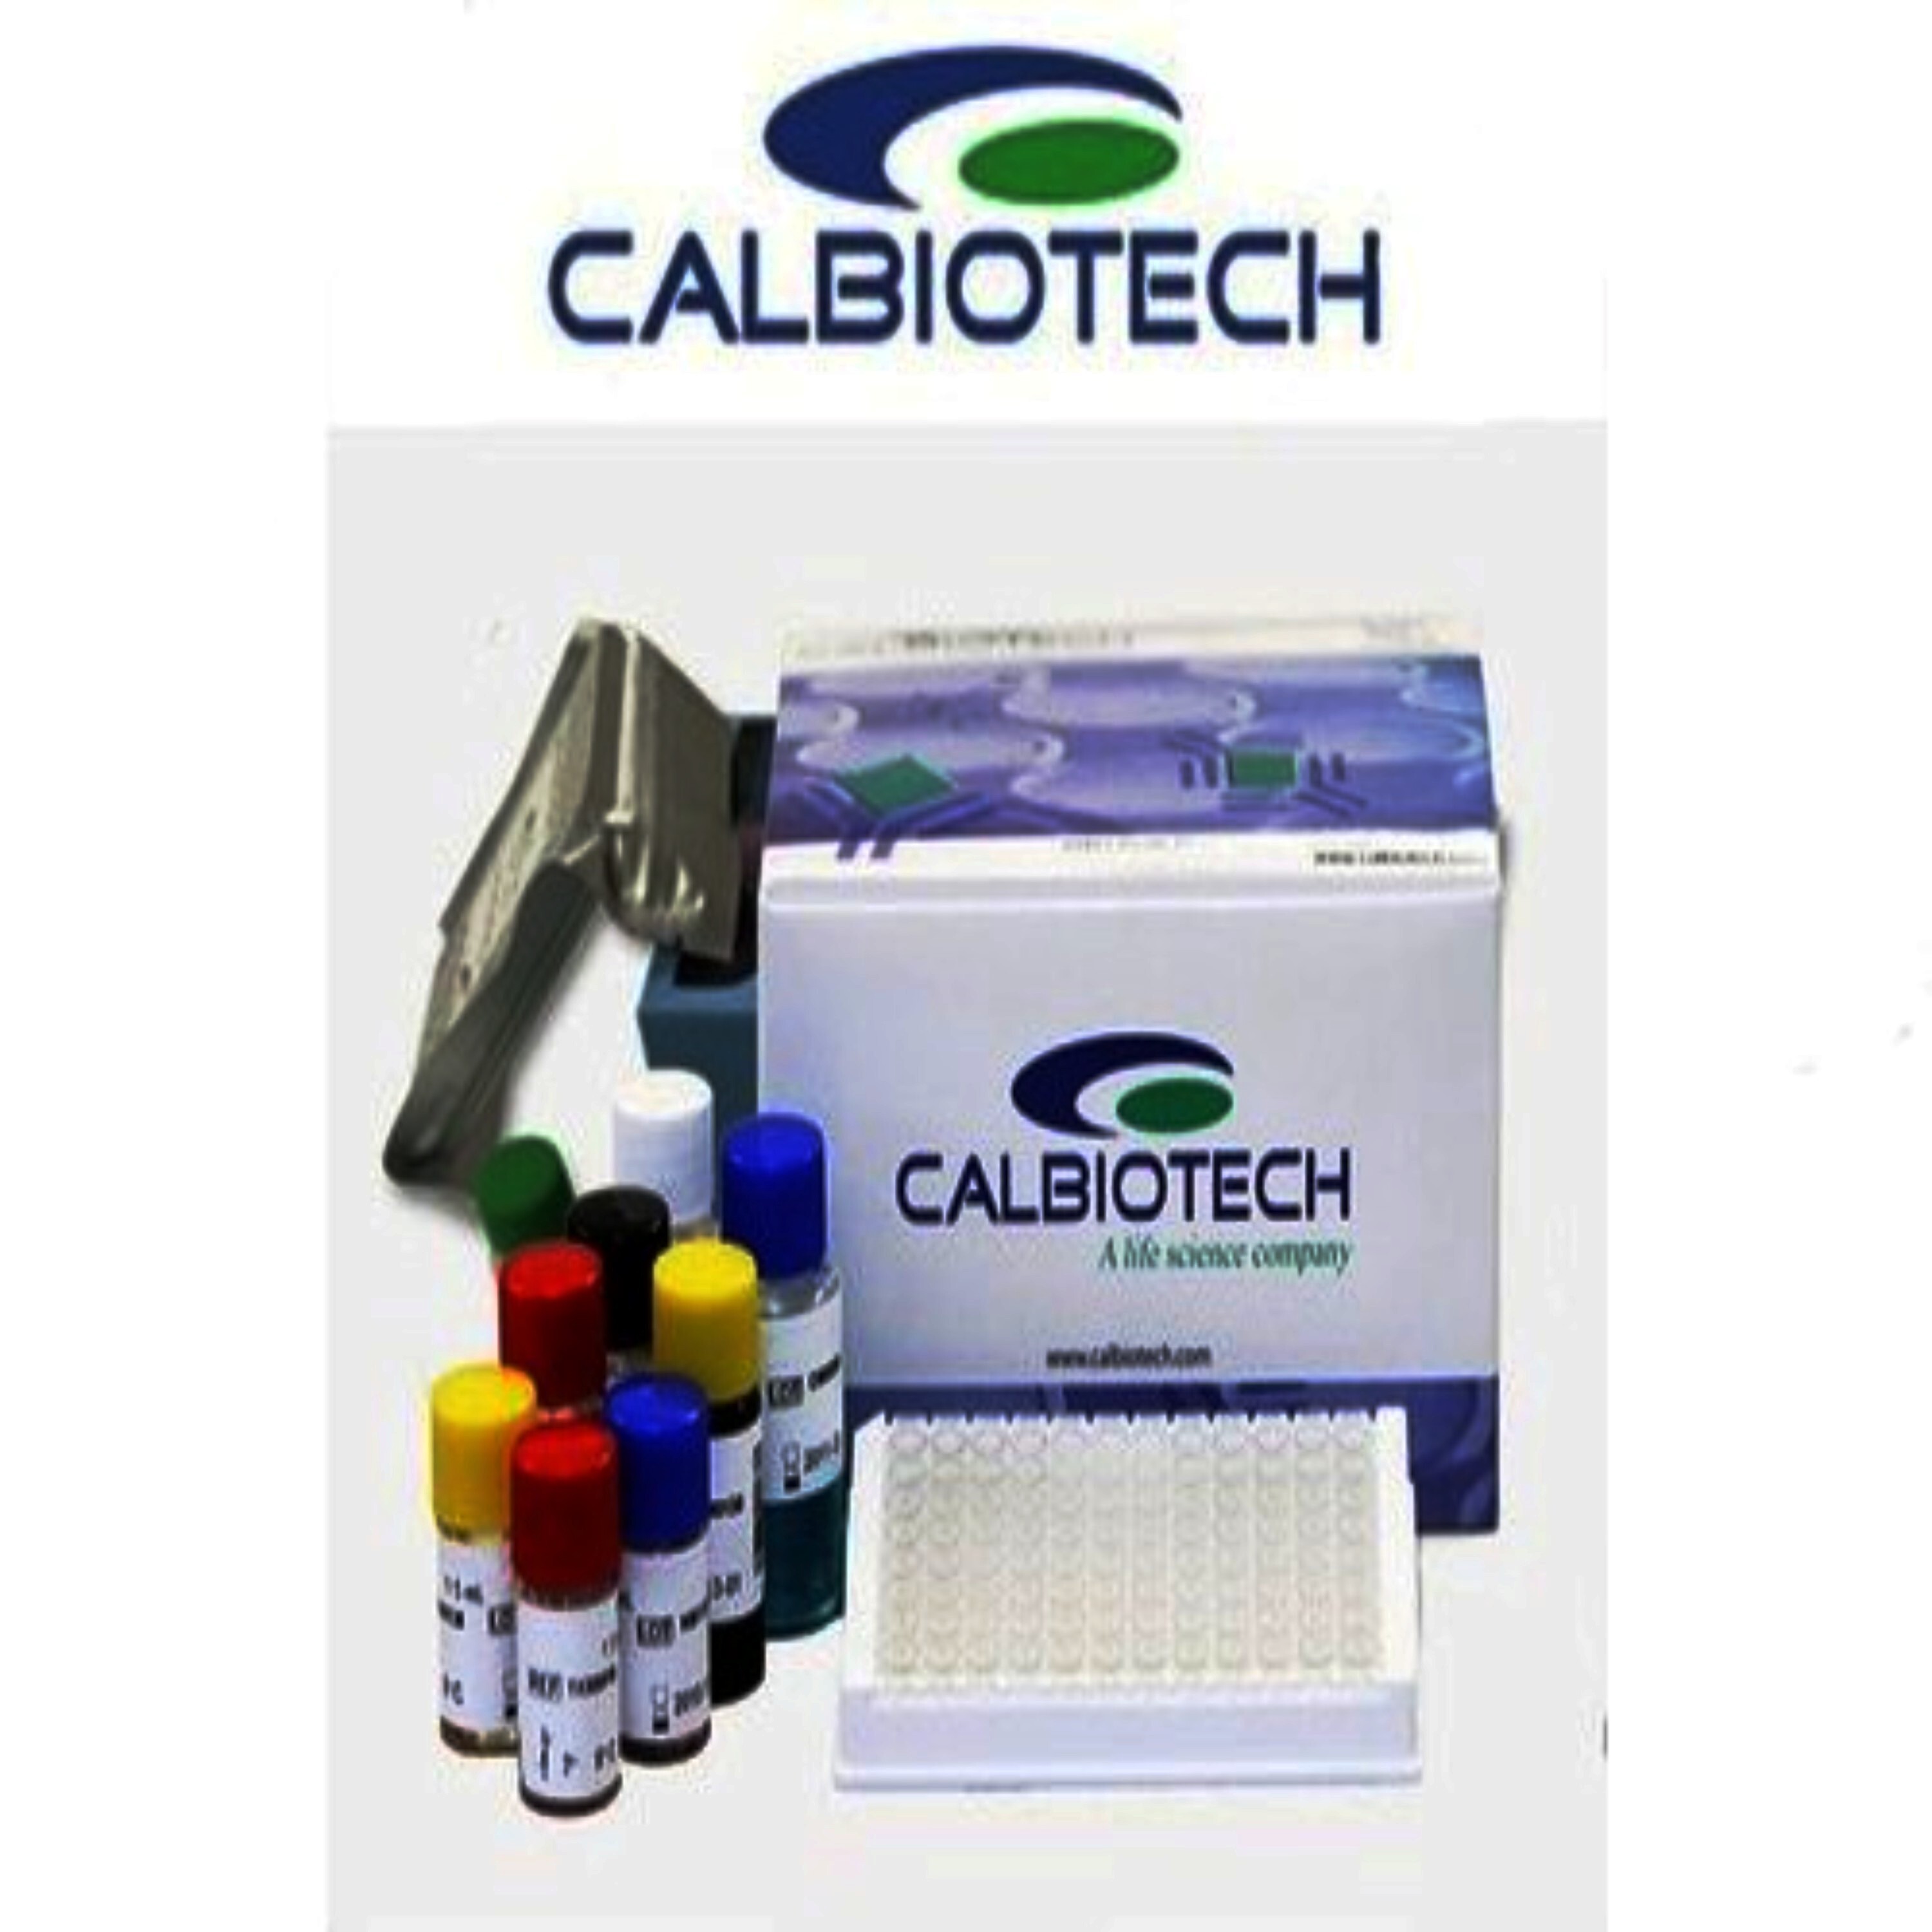 Calbiotech CCP - C-Peptide Elisa Kit